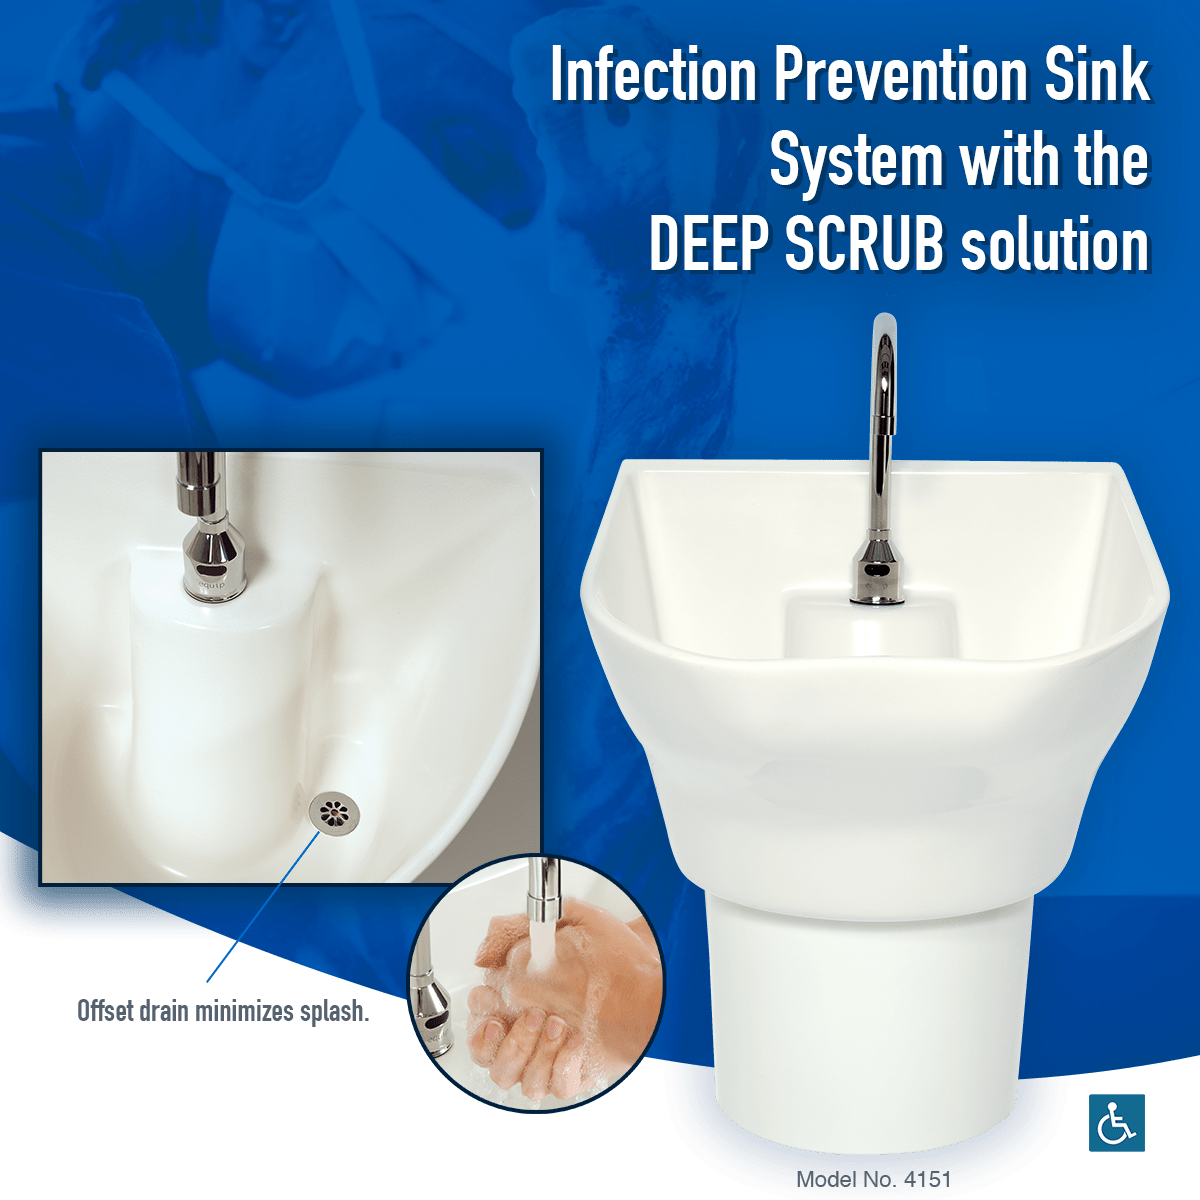 https://www.whitehallmfg.com/uploads/images/WH___Infection_Prevention_Sink_Header.png